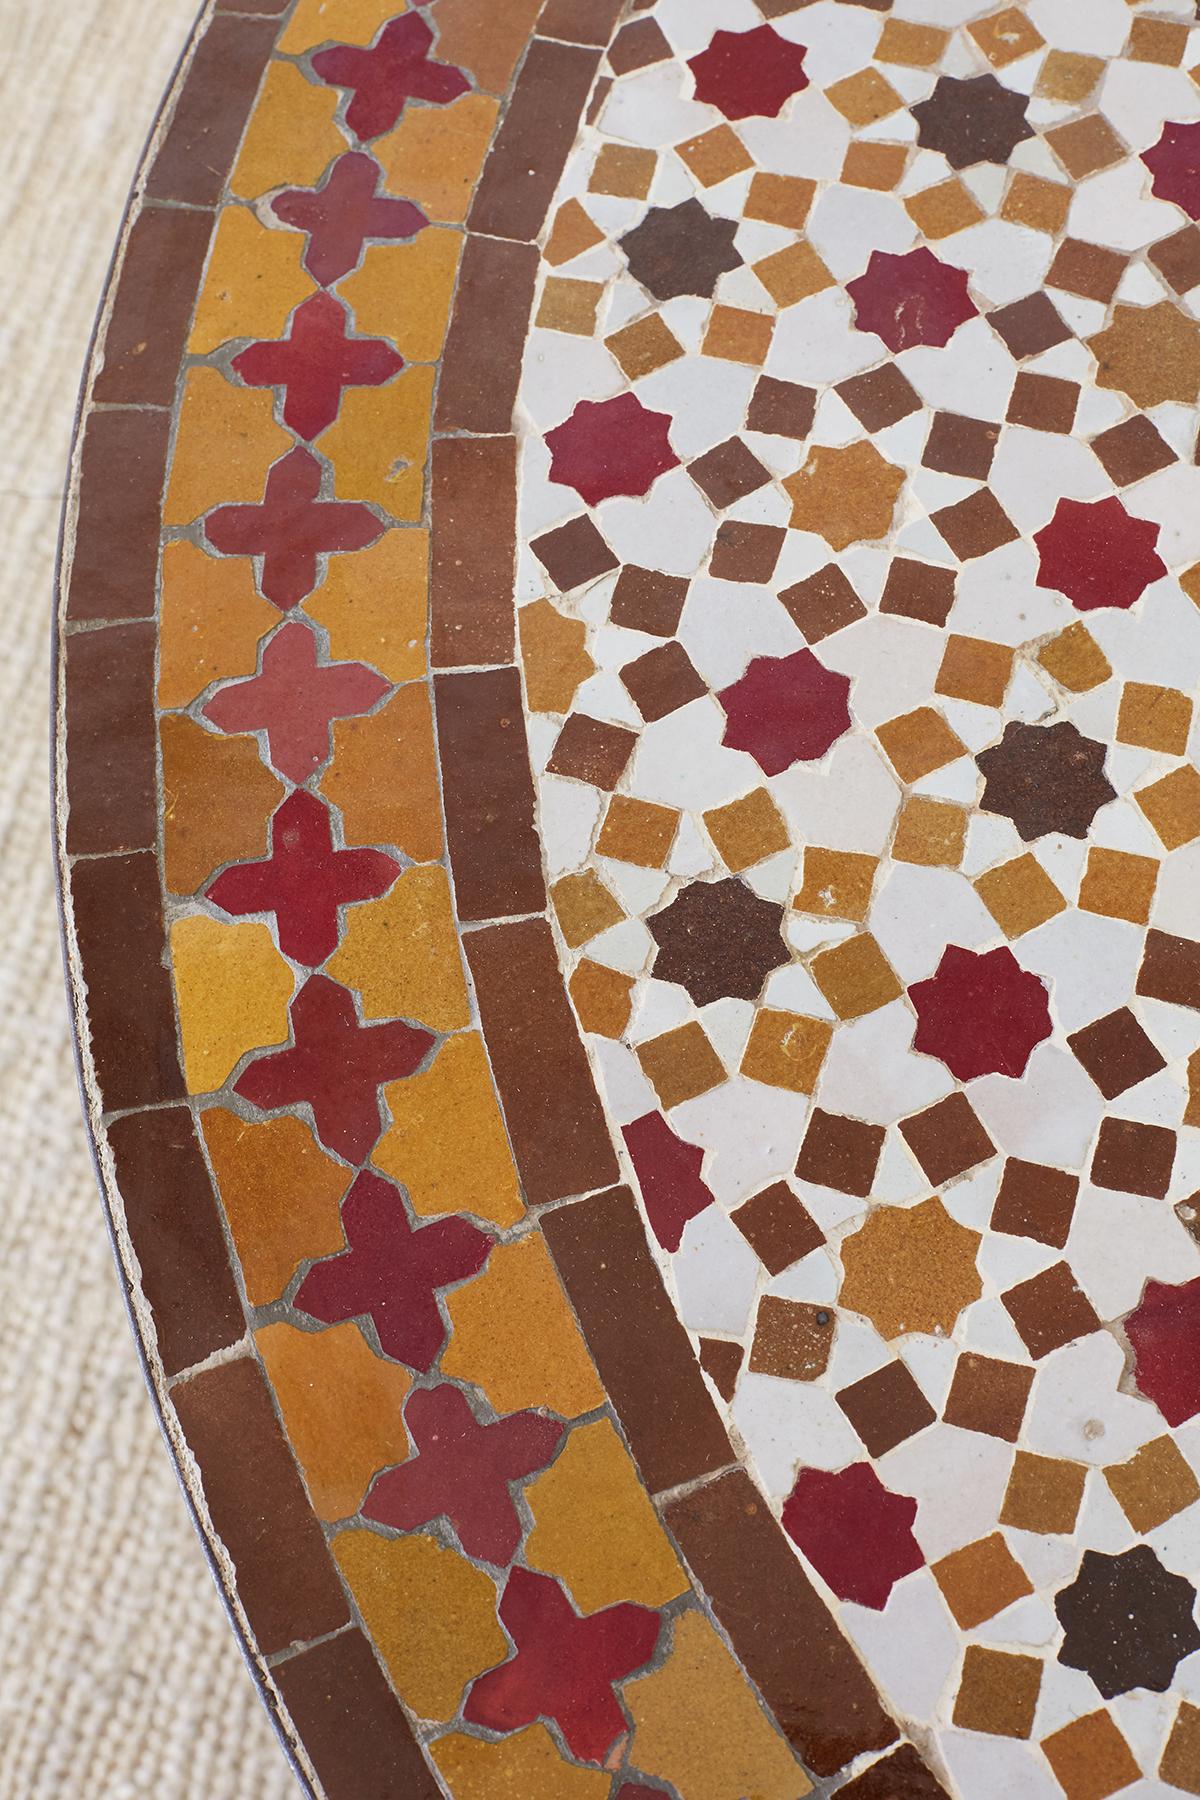 Moorish Spanish Dining Table with Moroccan Mosaic Tile Inlay